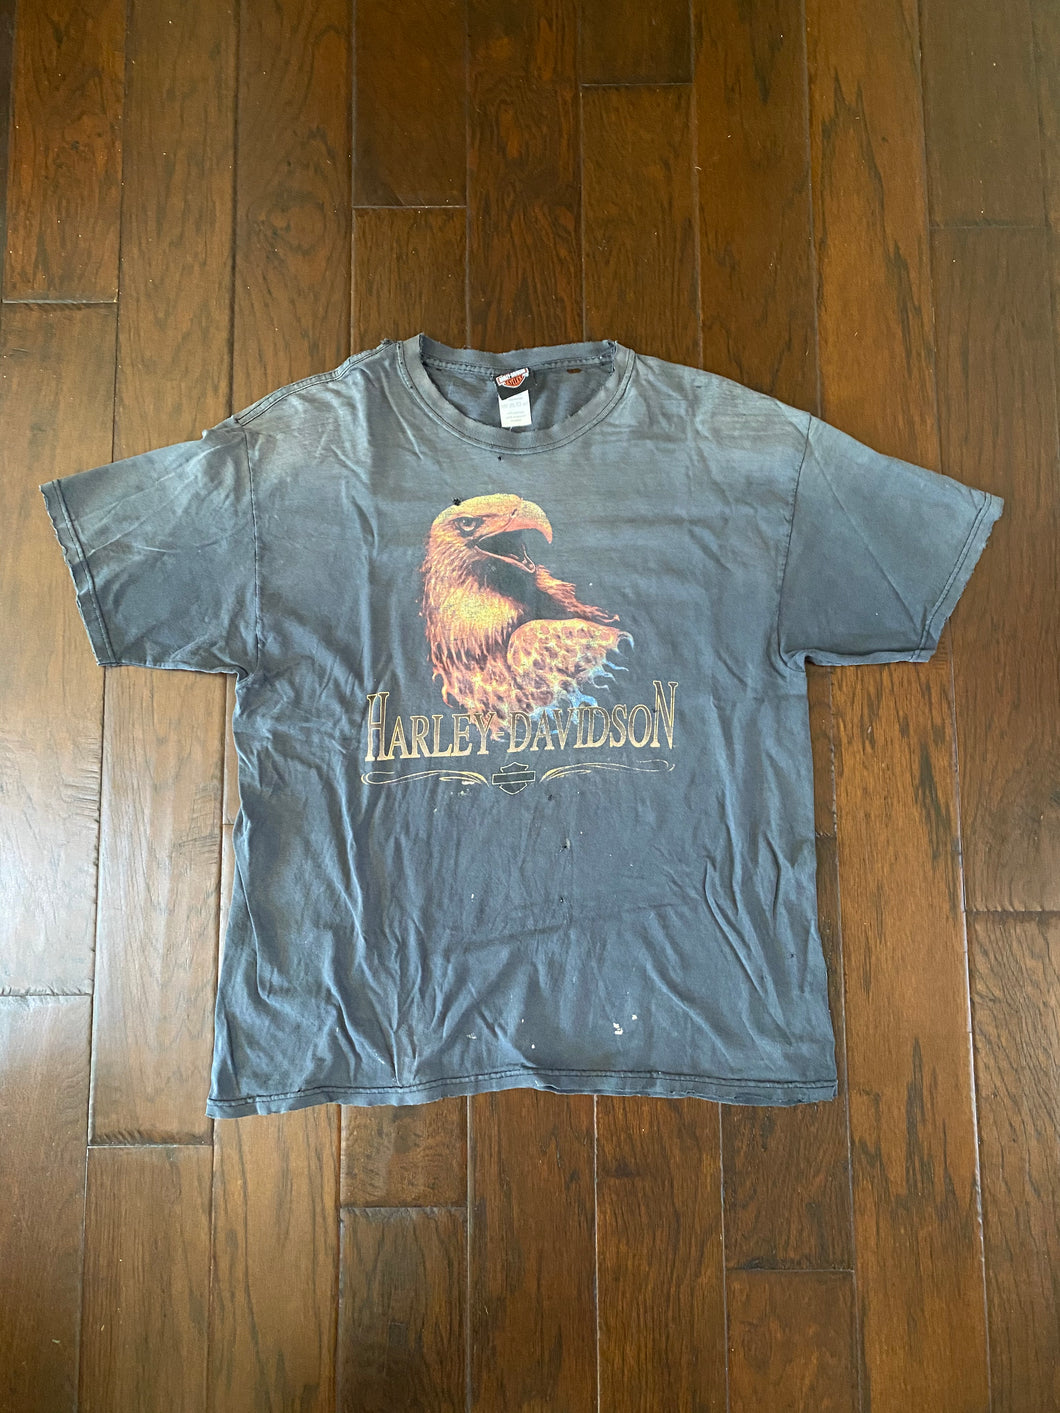 Harley-Davidson 1990’s “City Cycle Sales - Junction City, KS” Vintage Distressed T-shirt